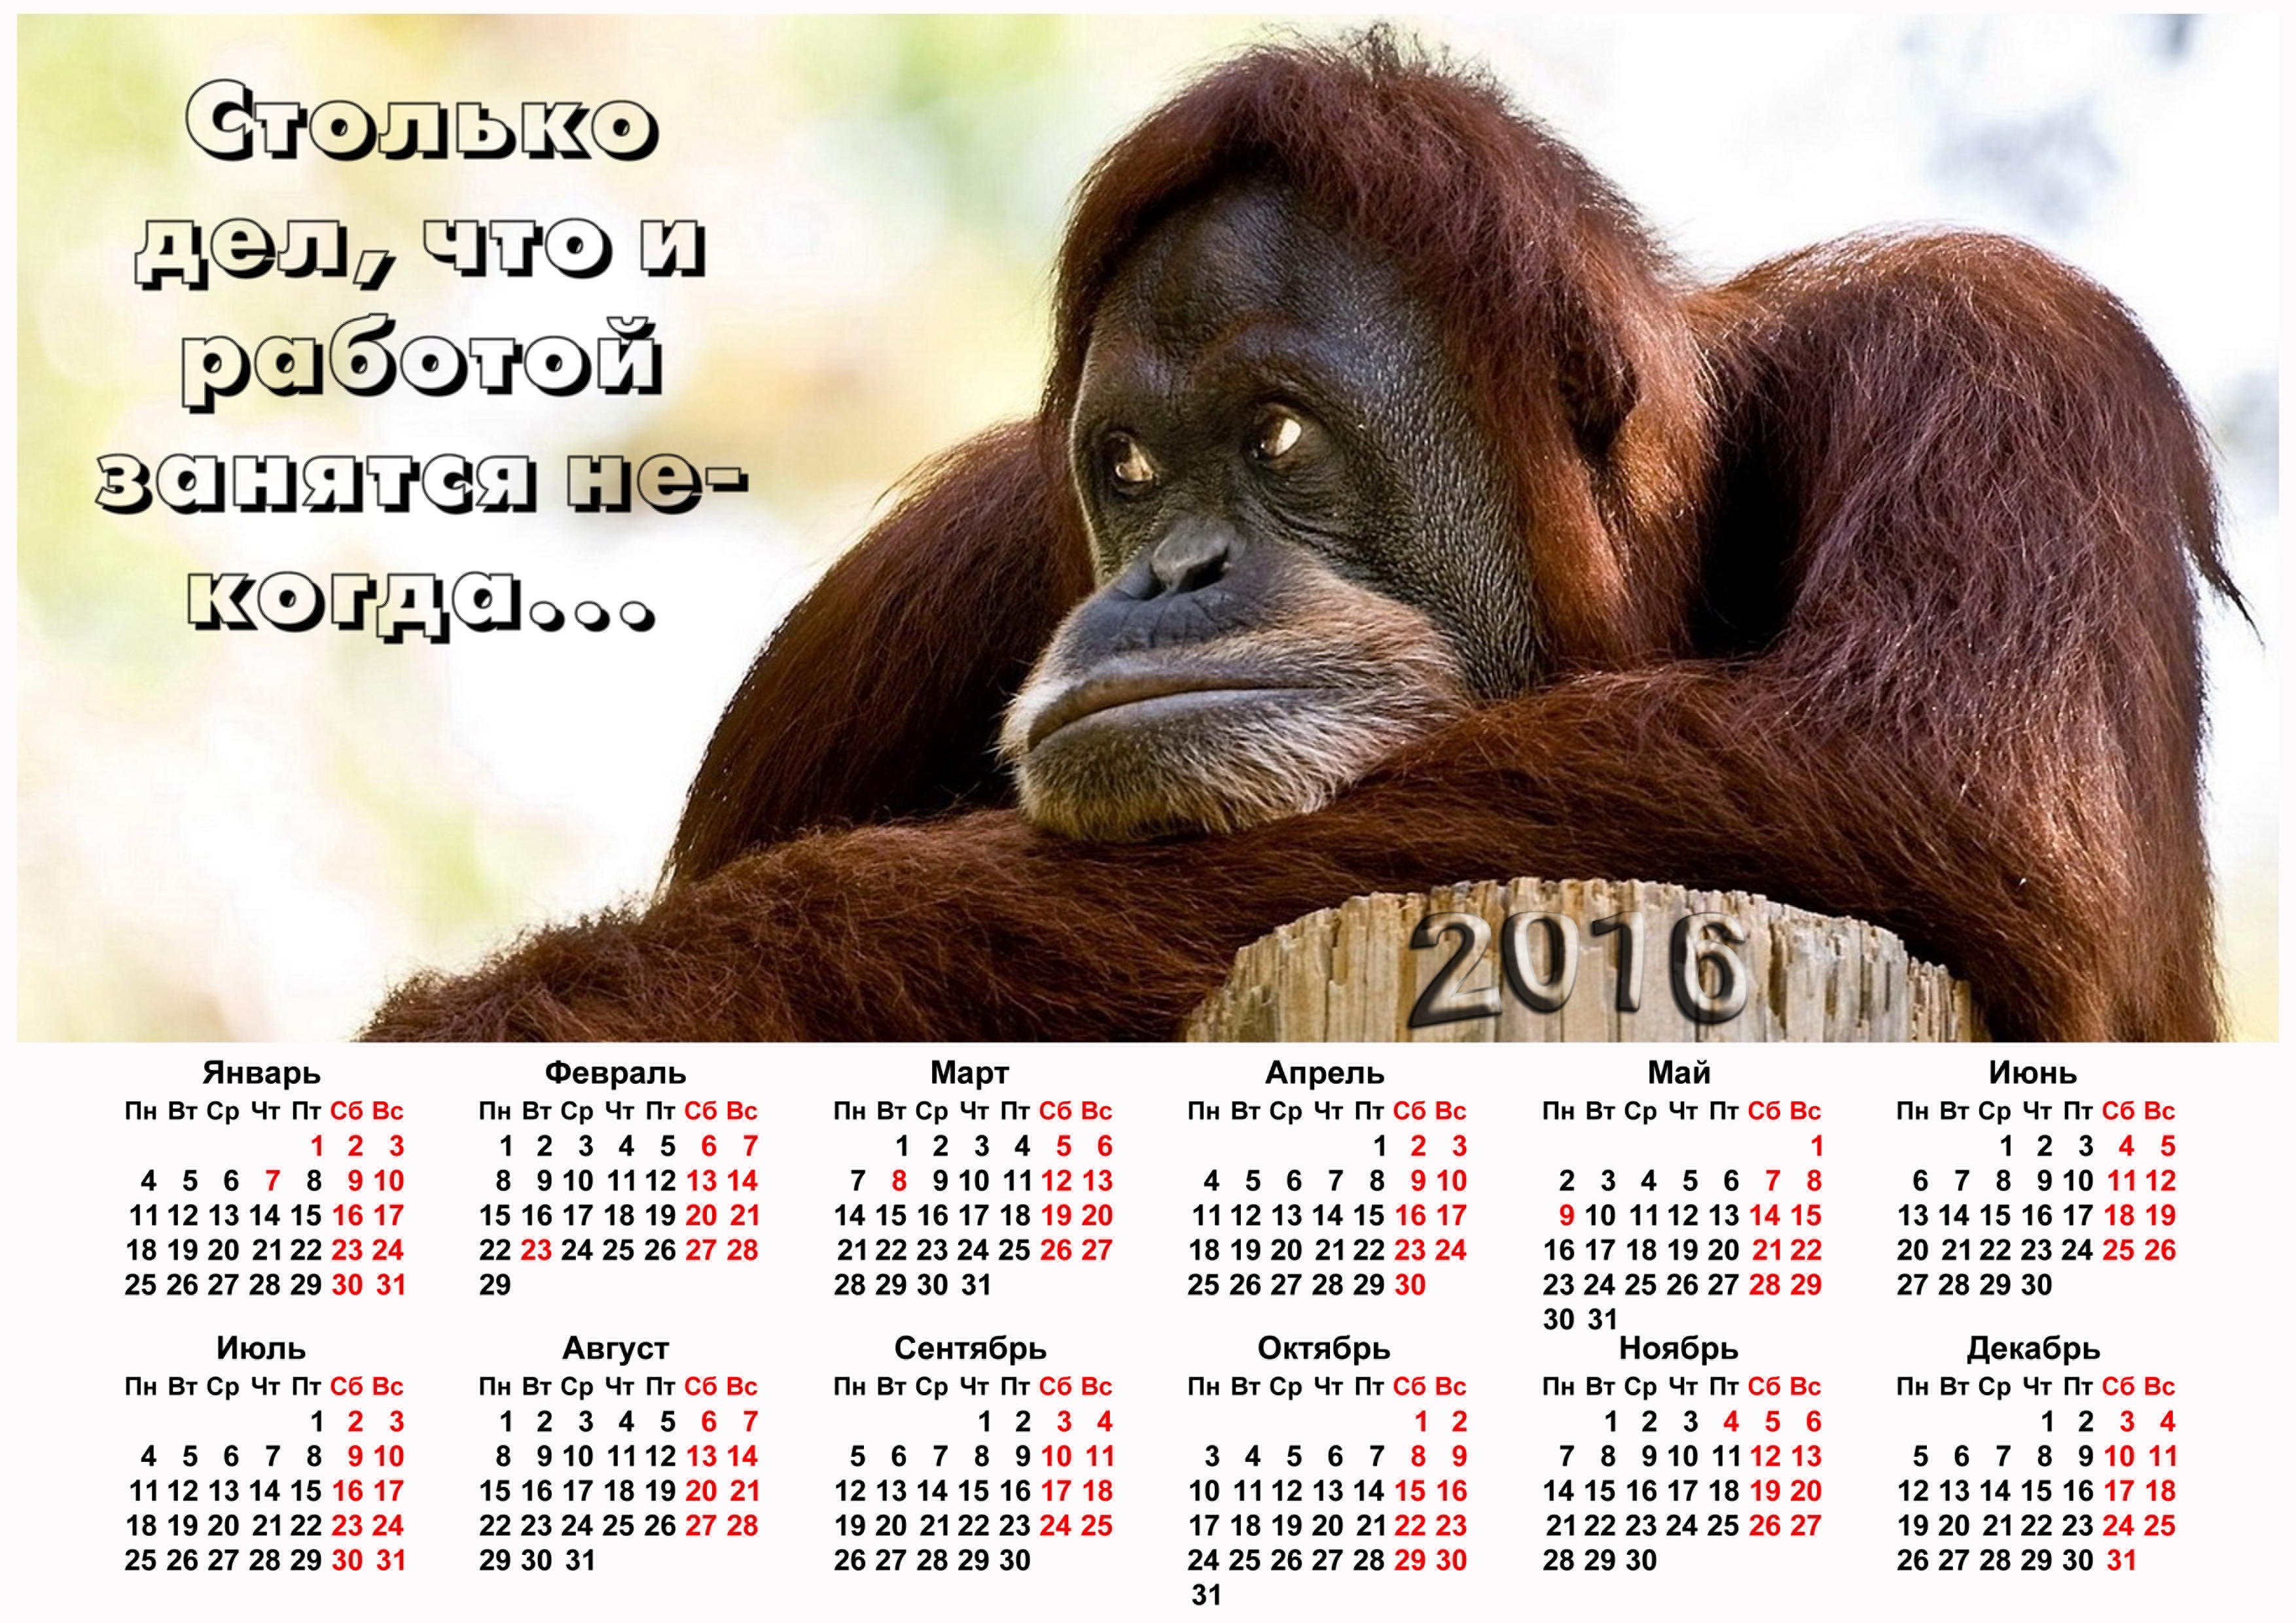 2015 2016 года. Календарь 2016 года. Календарь 2016 год обезьяны. Календарь с обезьяной. Календарь 2016 года по месяцам.